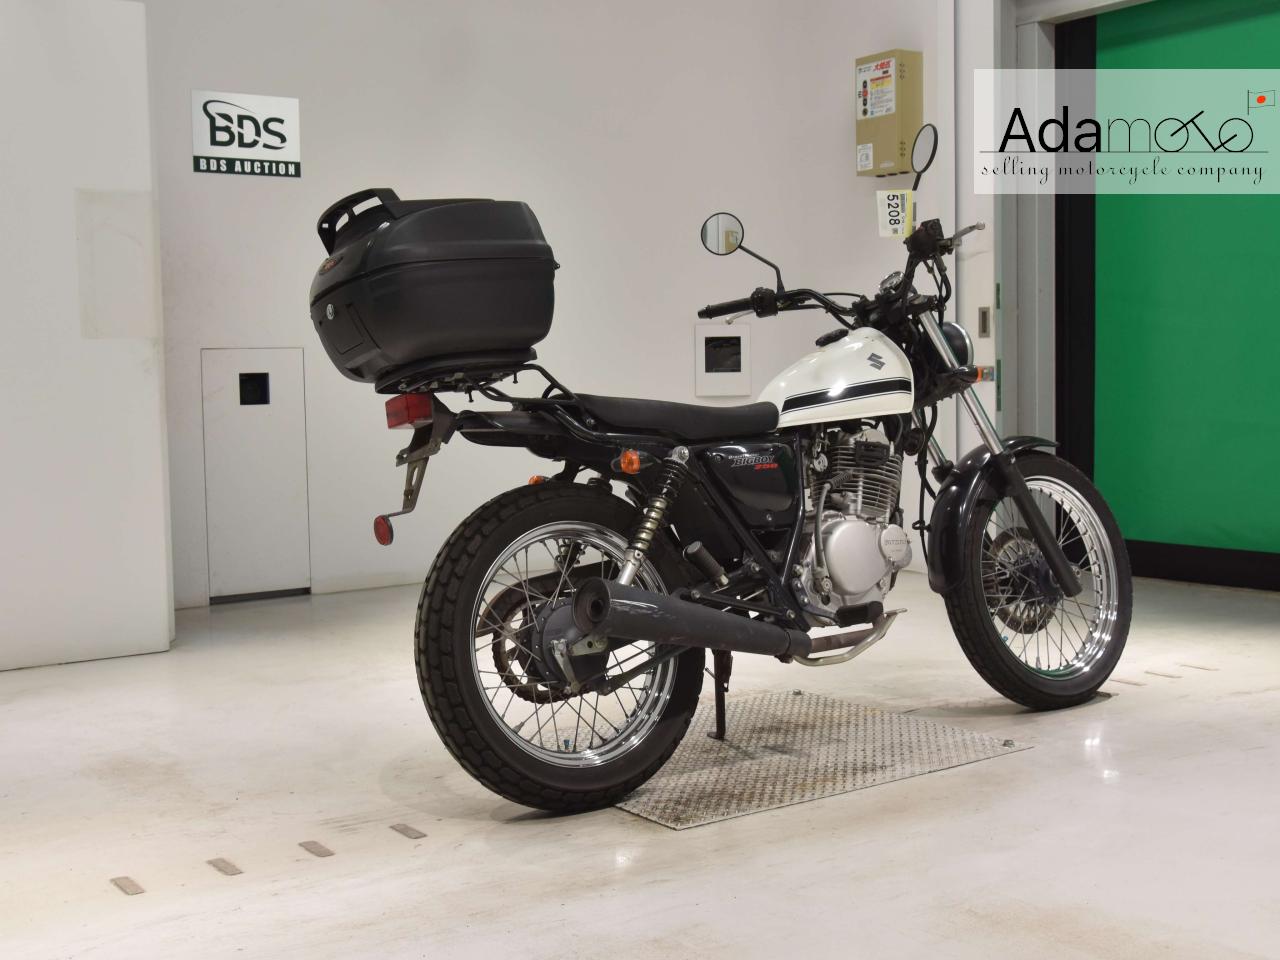 Suzuki GRASSTRACKER BIG BOY - Adamoto - Motorcycles from Japan